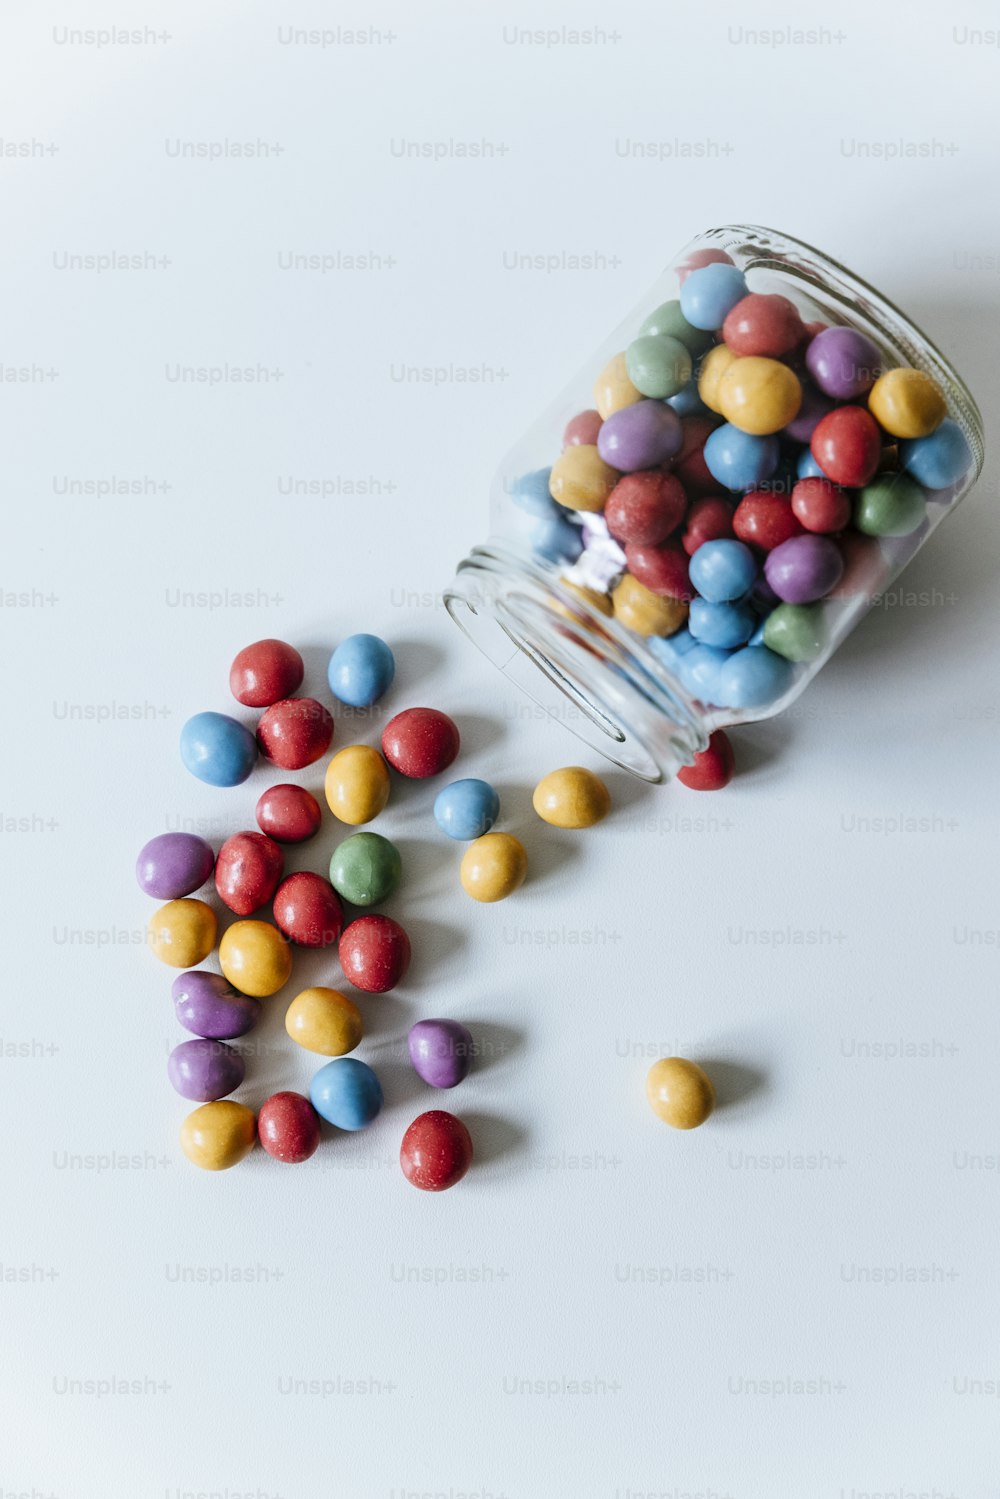 Un grupo de caramelos de colores